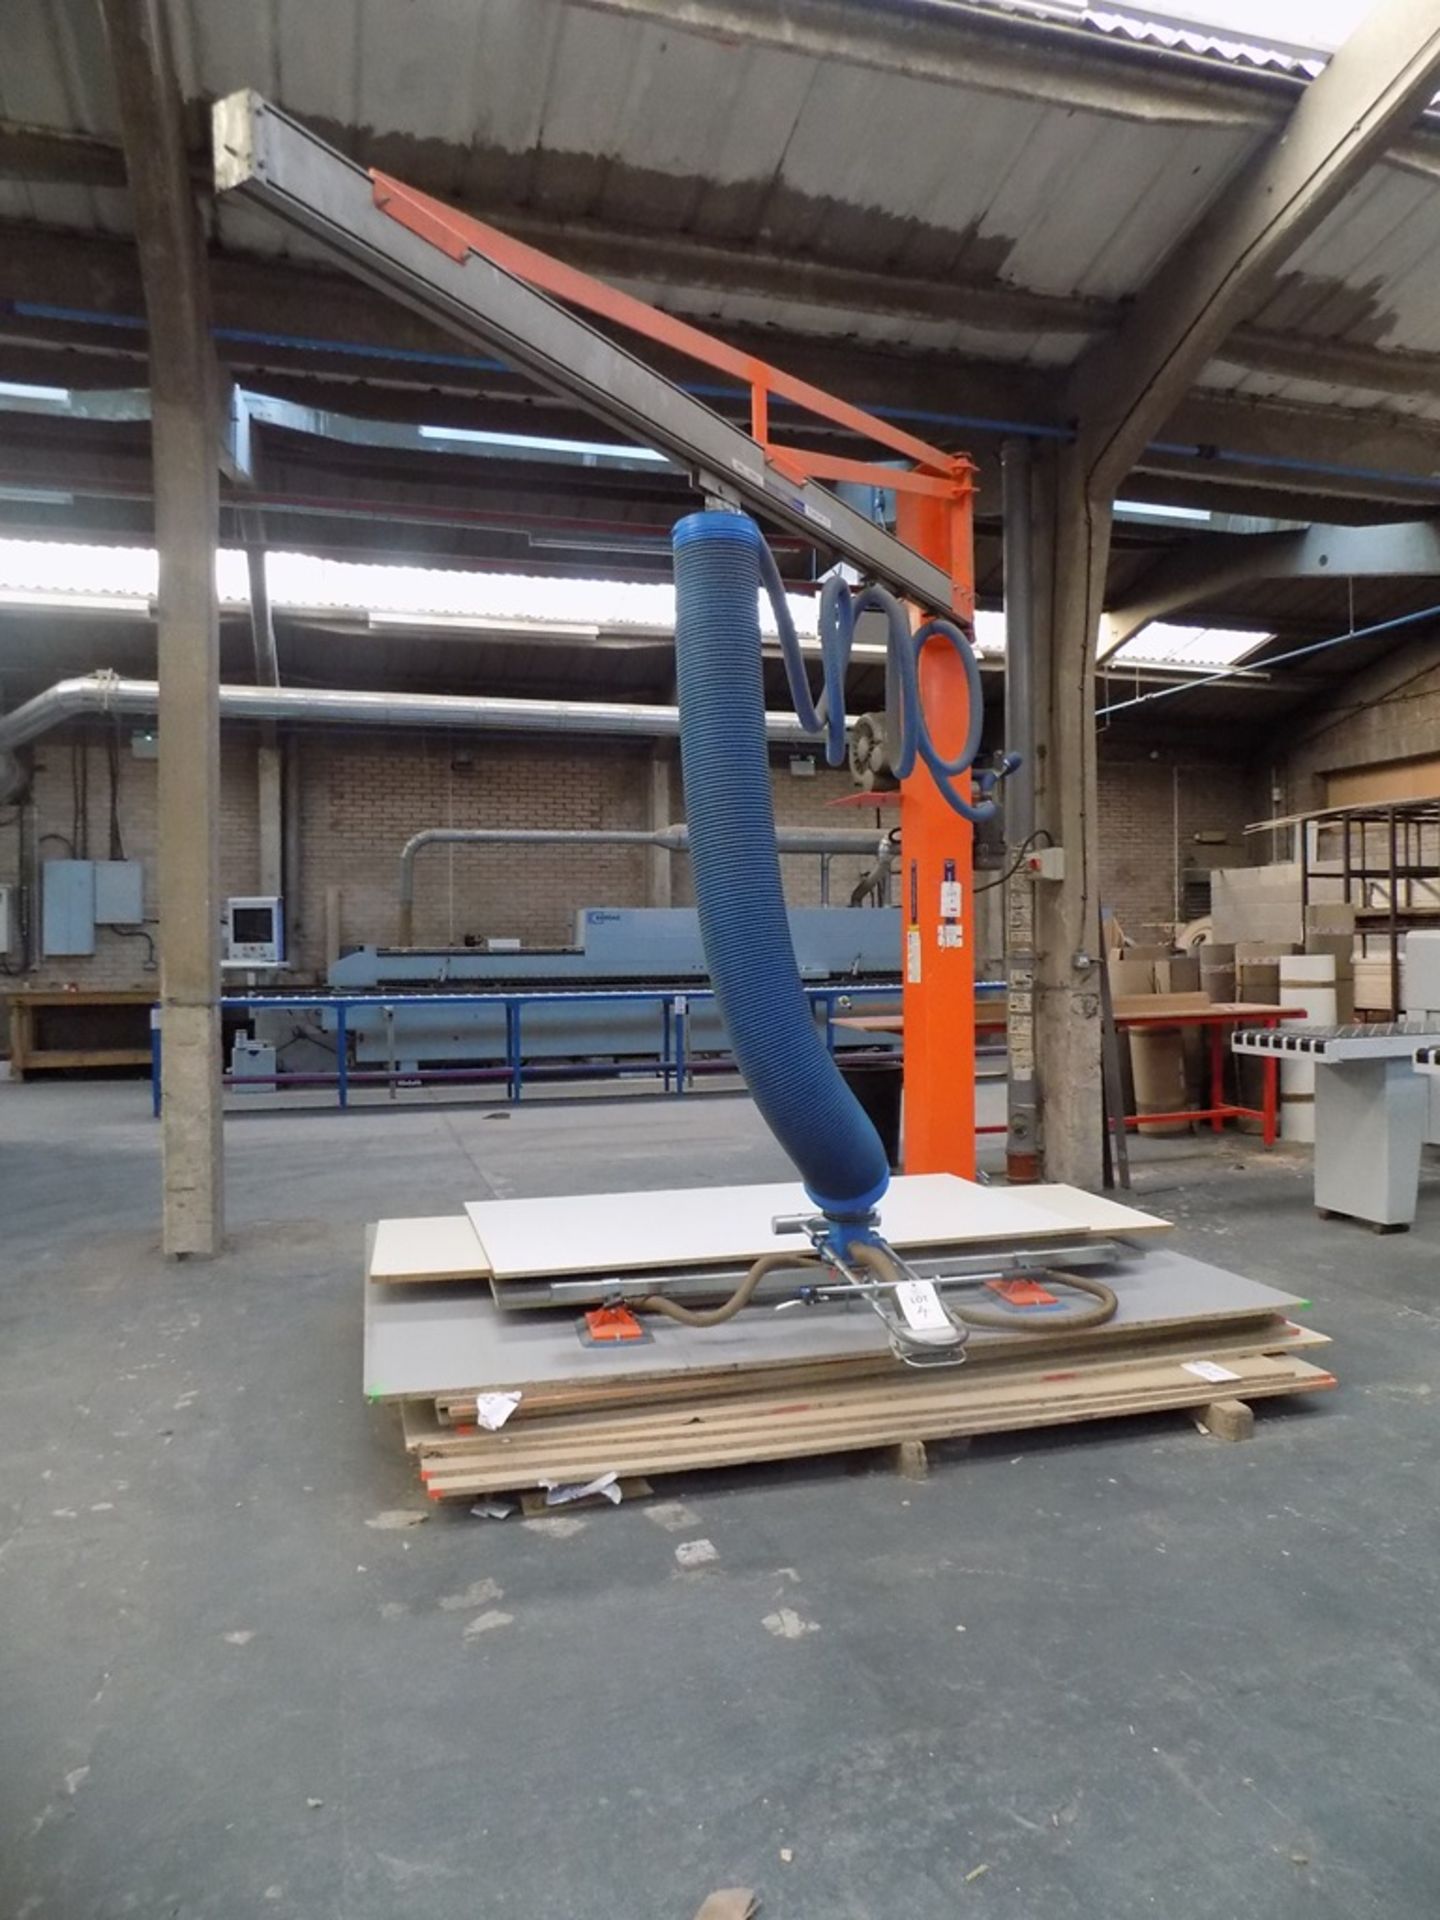 Palamatic 4m swivel jib crane with vacuum lifting unit, SWL 150Kg (Risk Assessment and Method